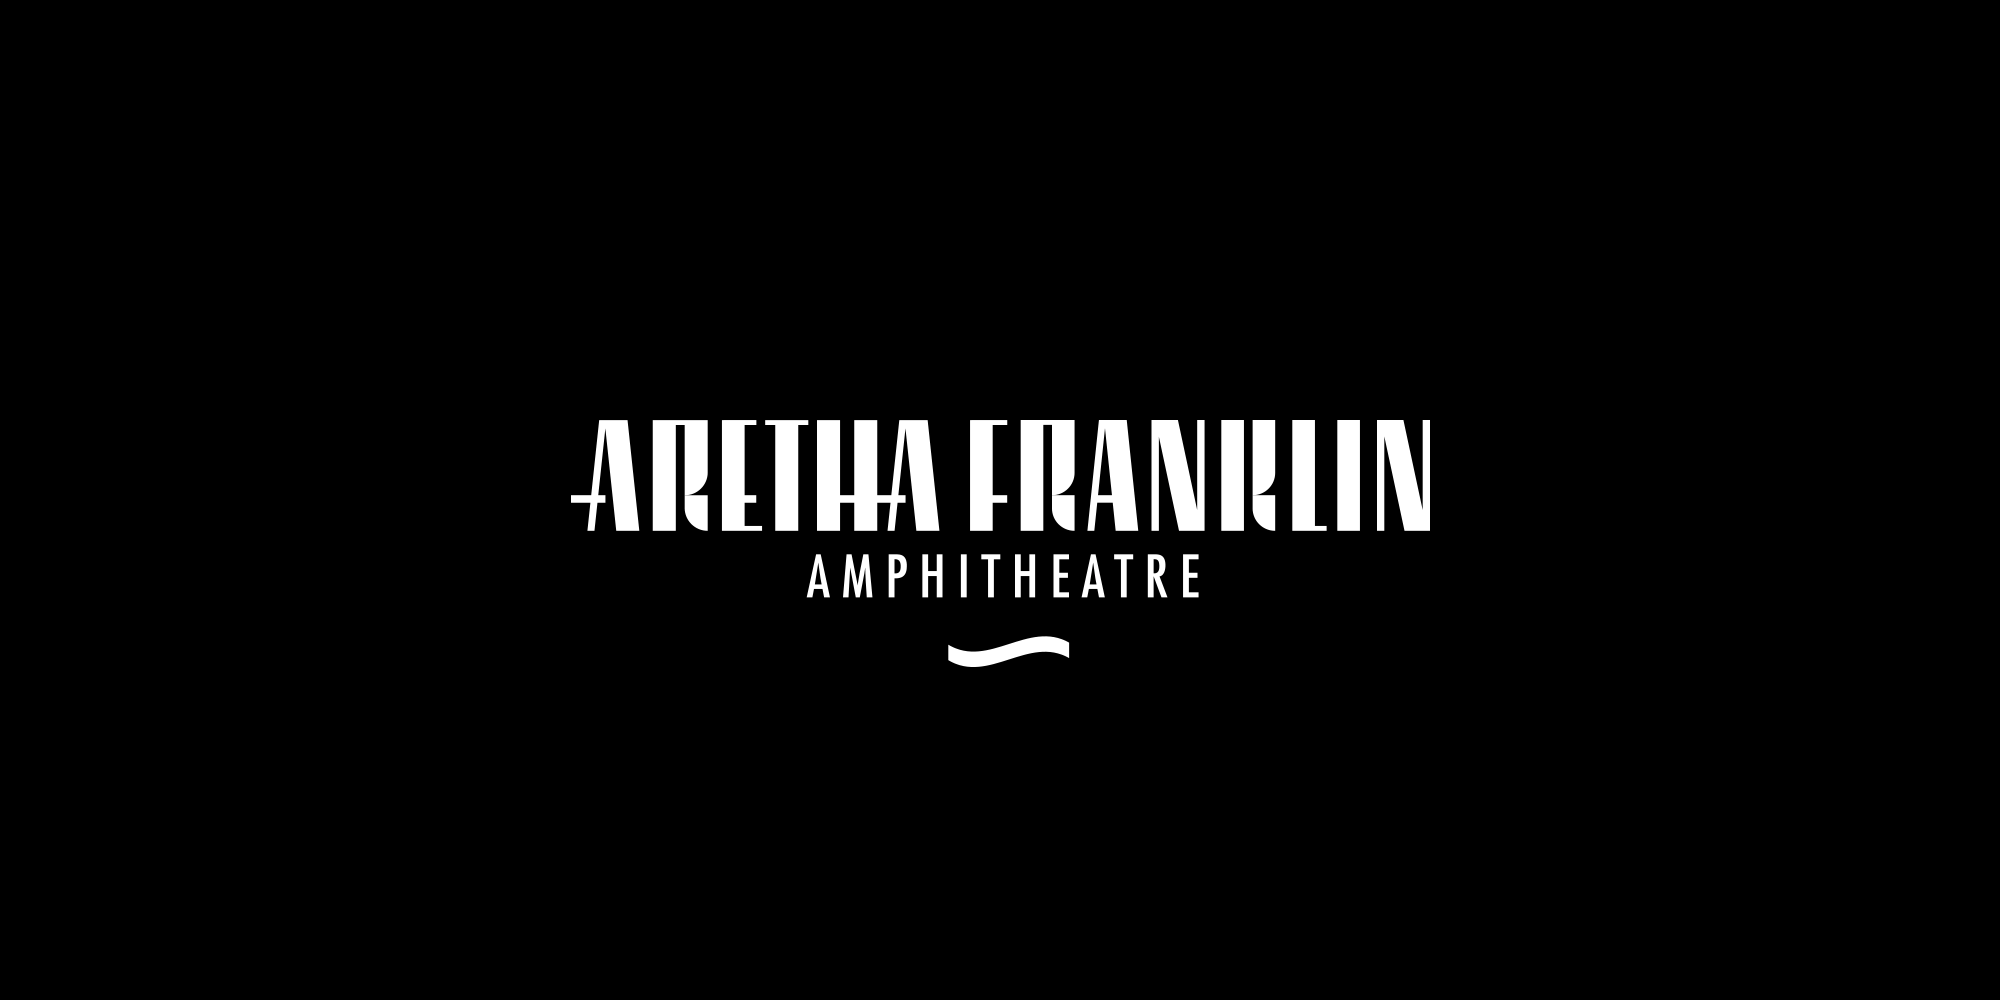 Aretha Franklin Ampitheatre Logo Gif